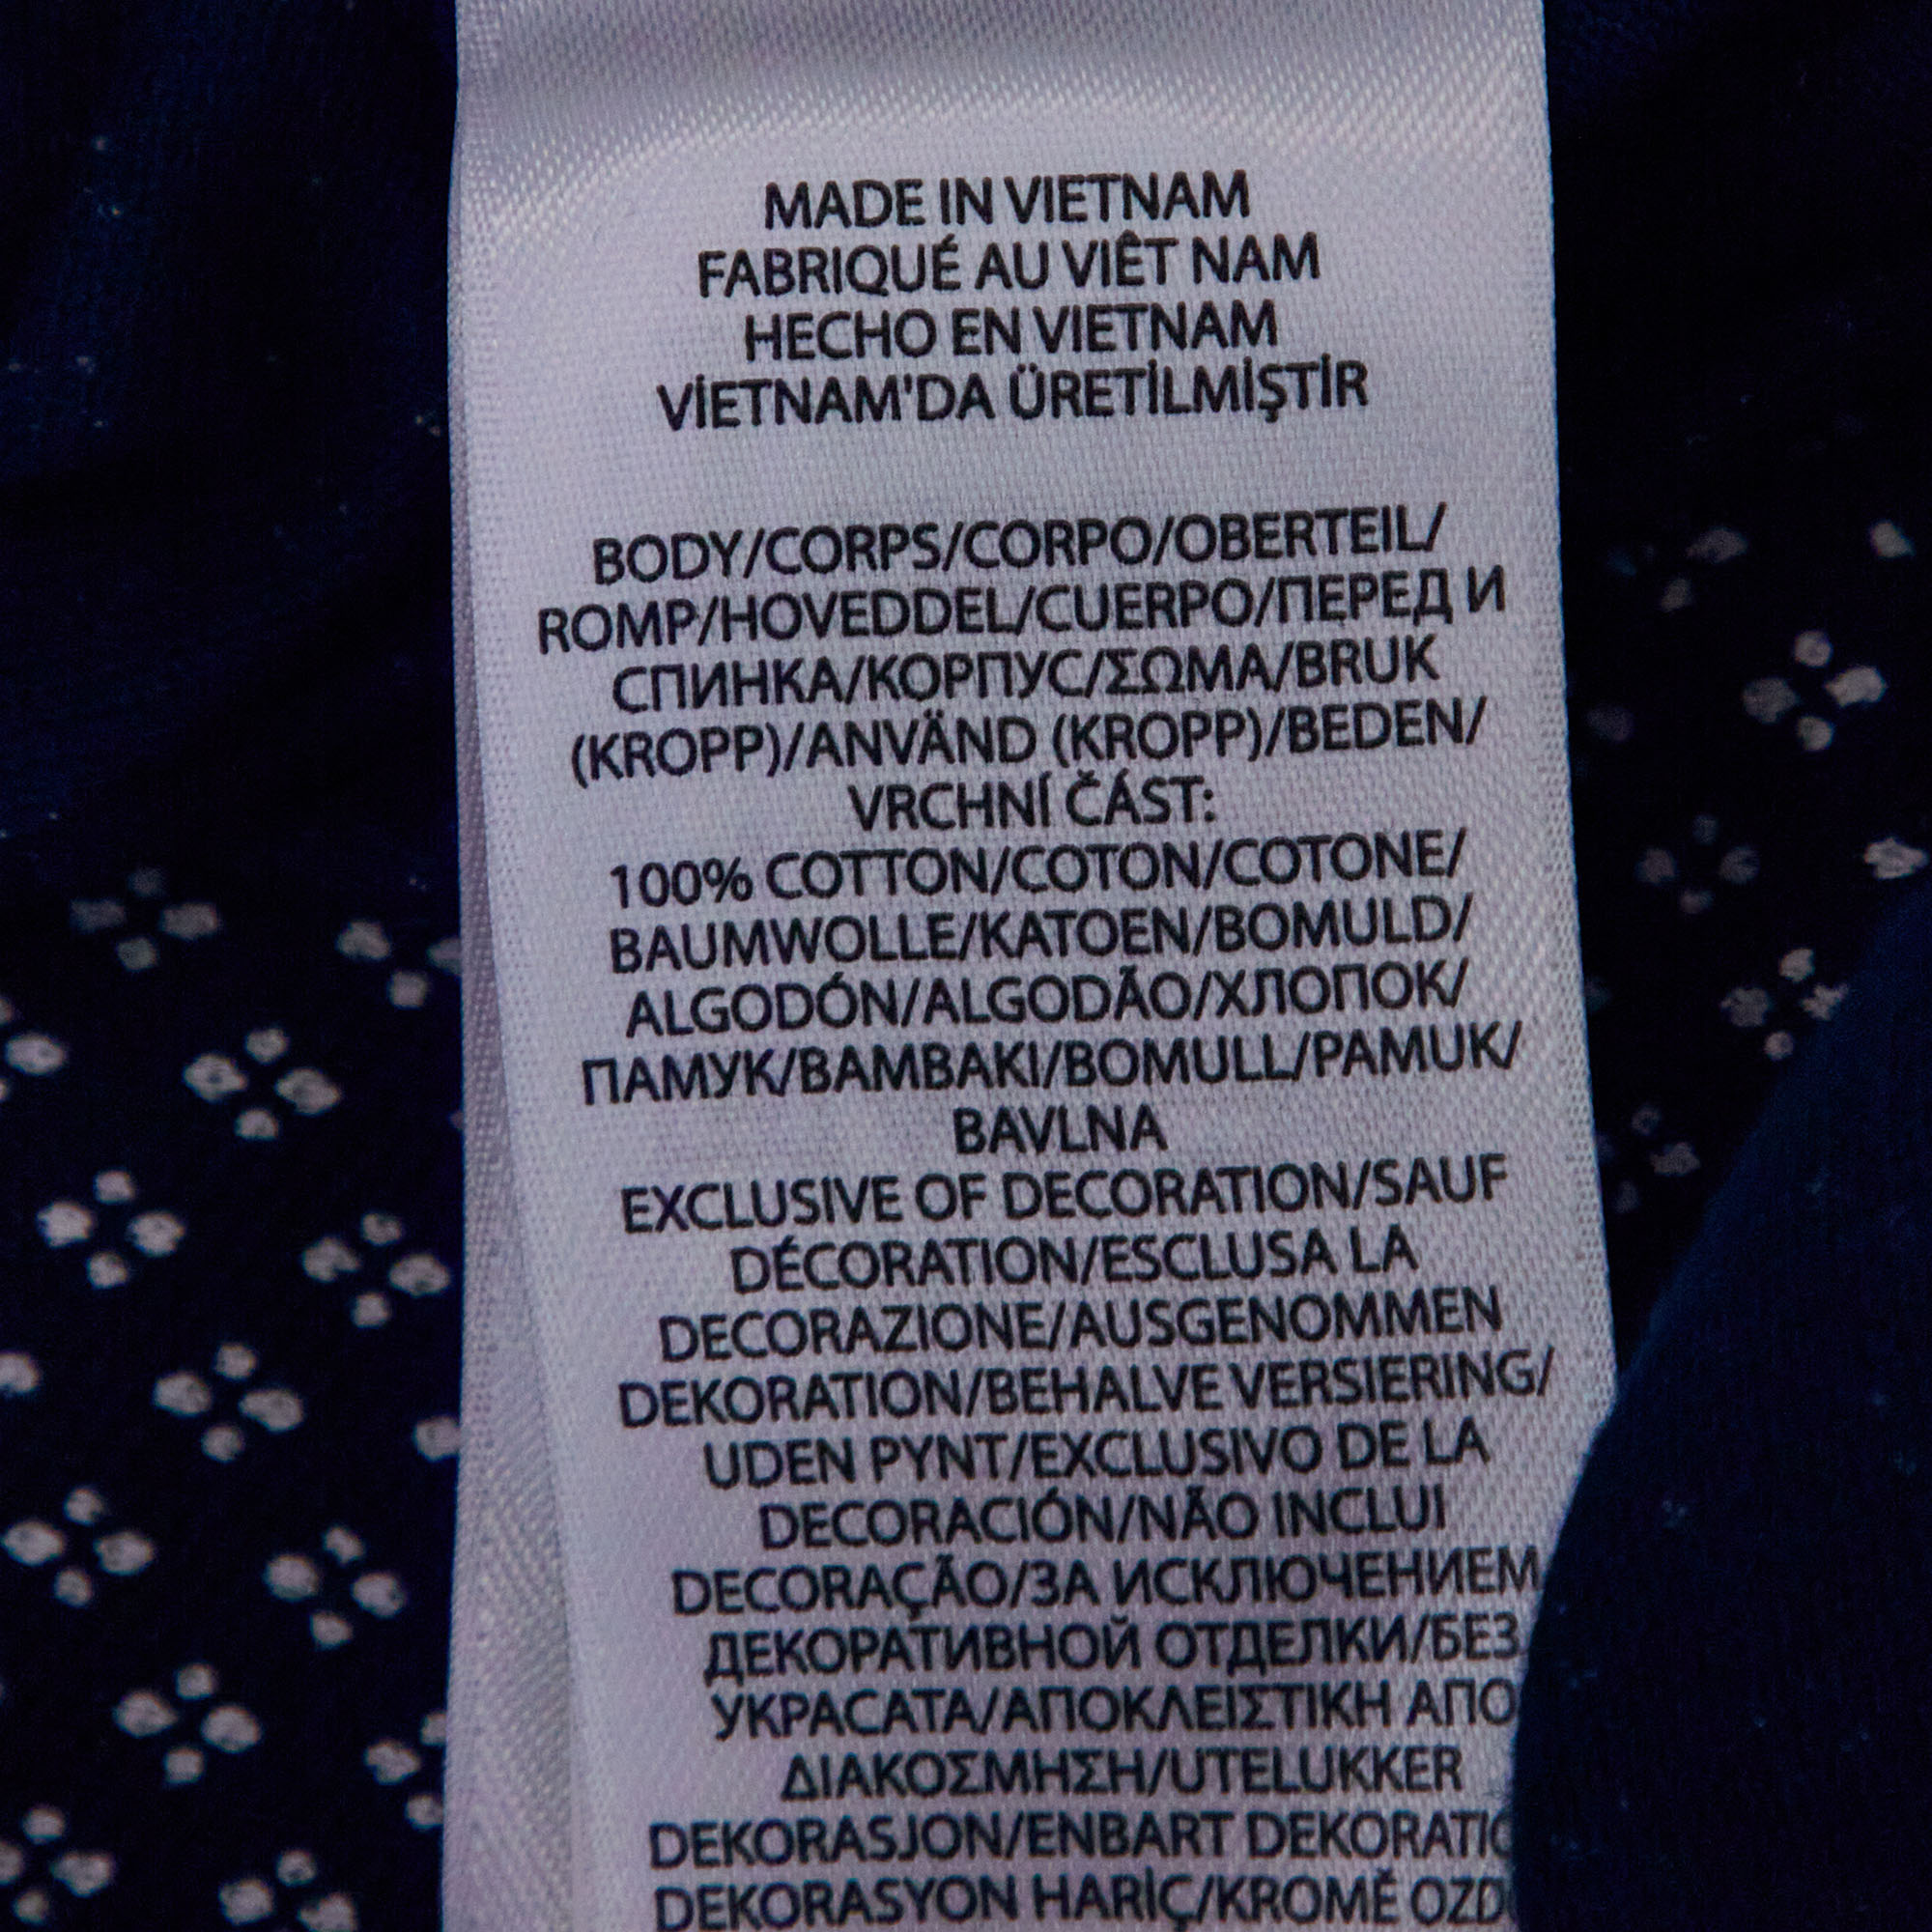 Polo Ralph Lauren Navy Blue Printed Cotton Button Down Full Sleeve Shirt XL